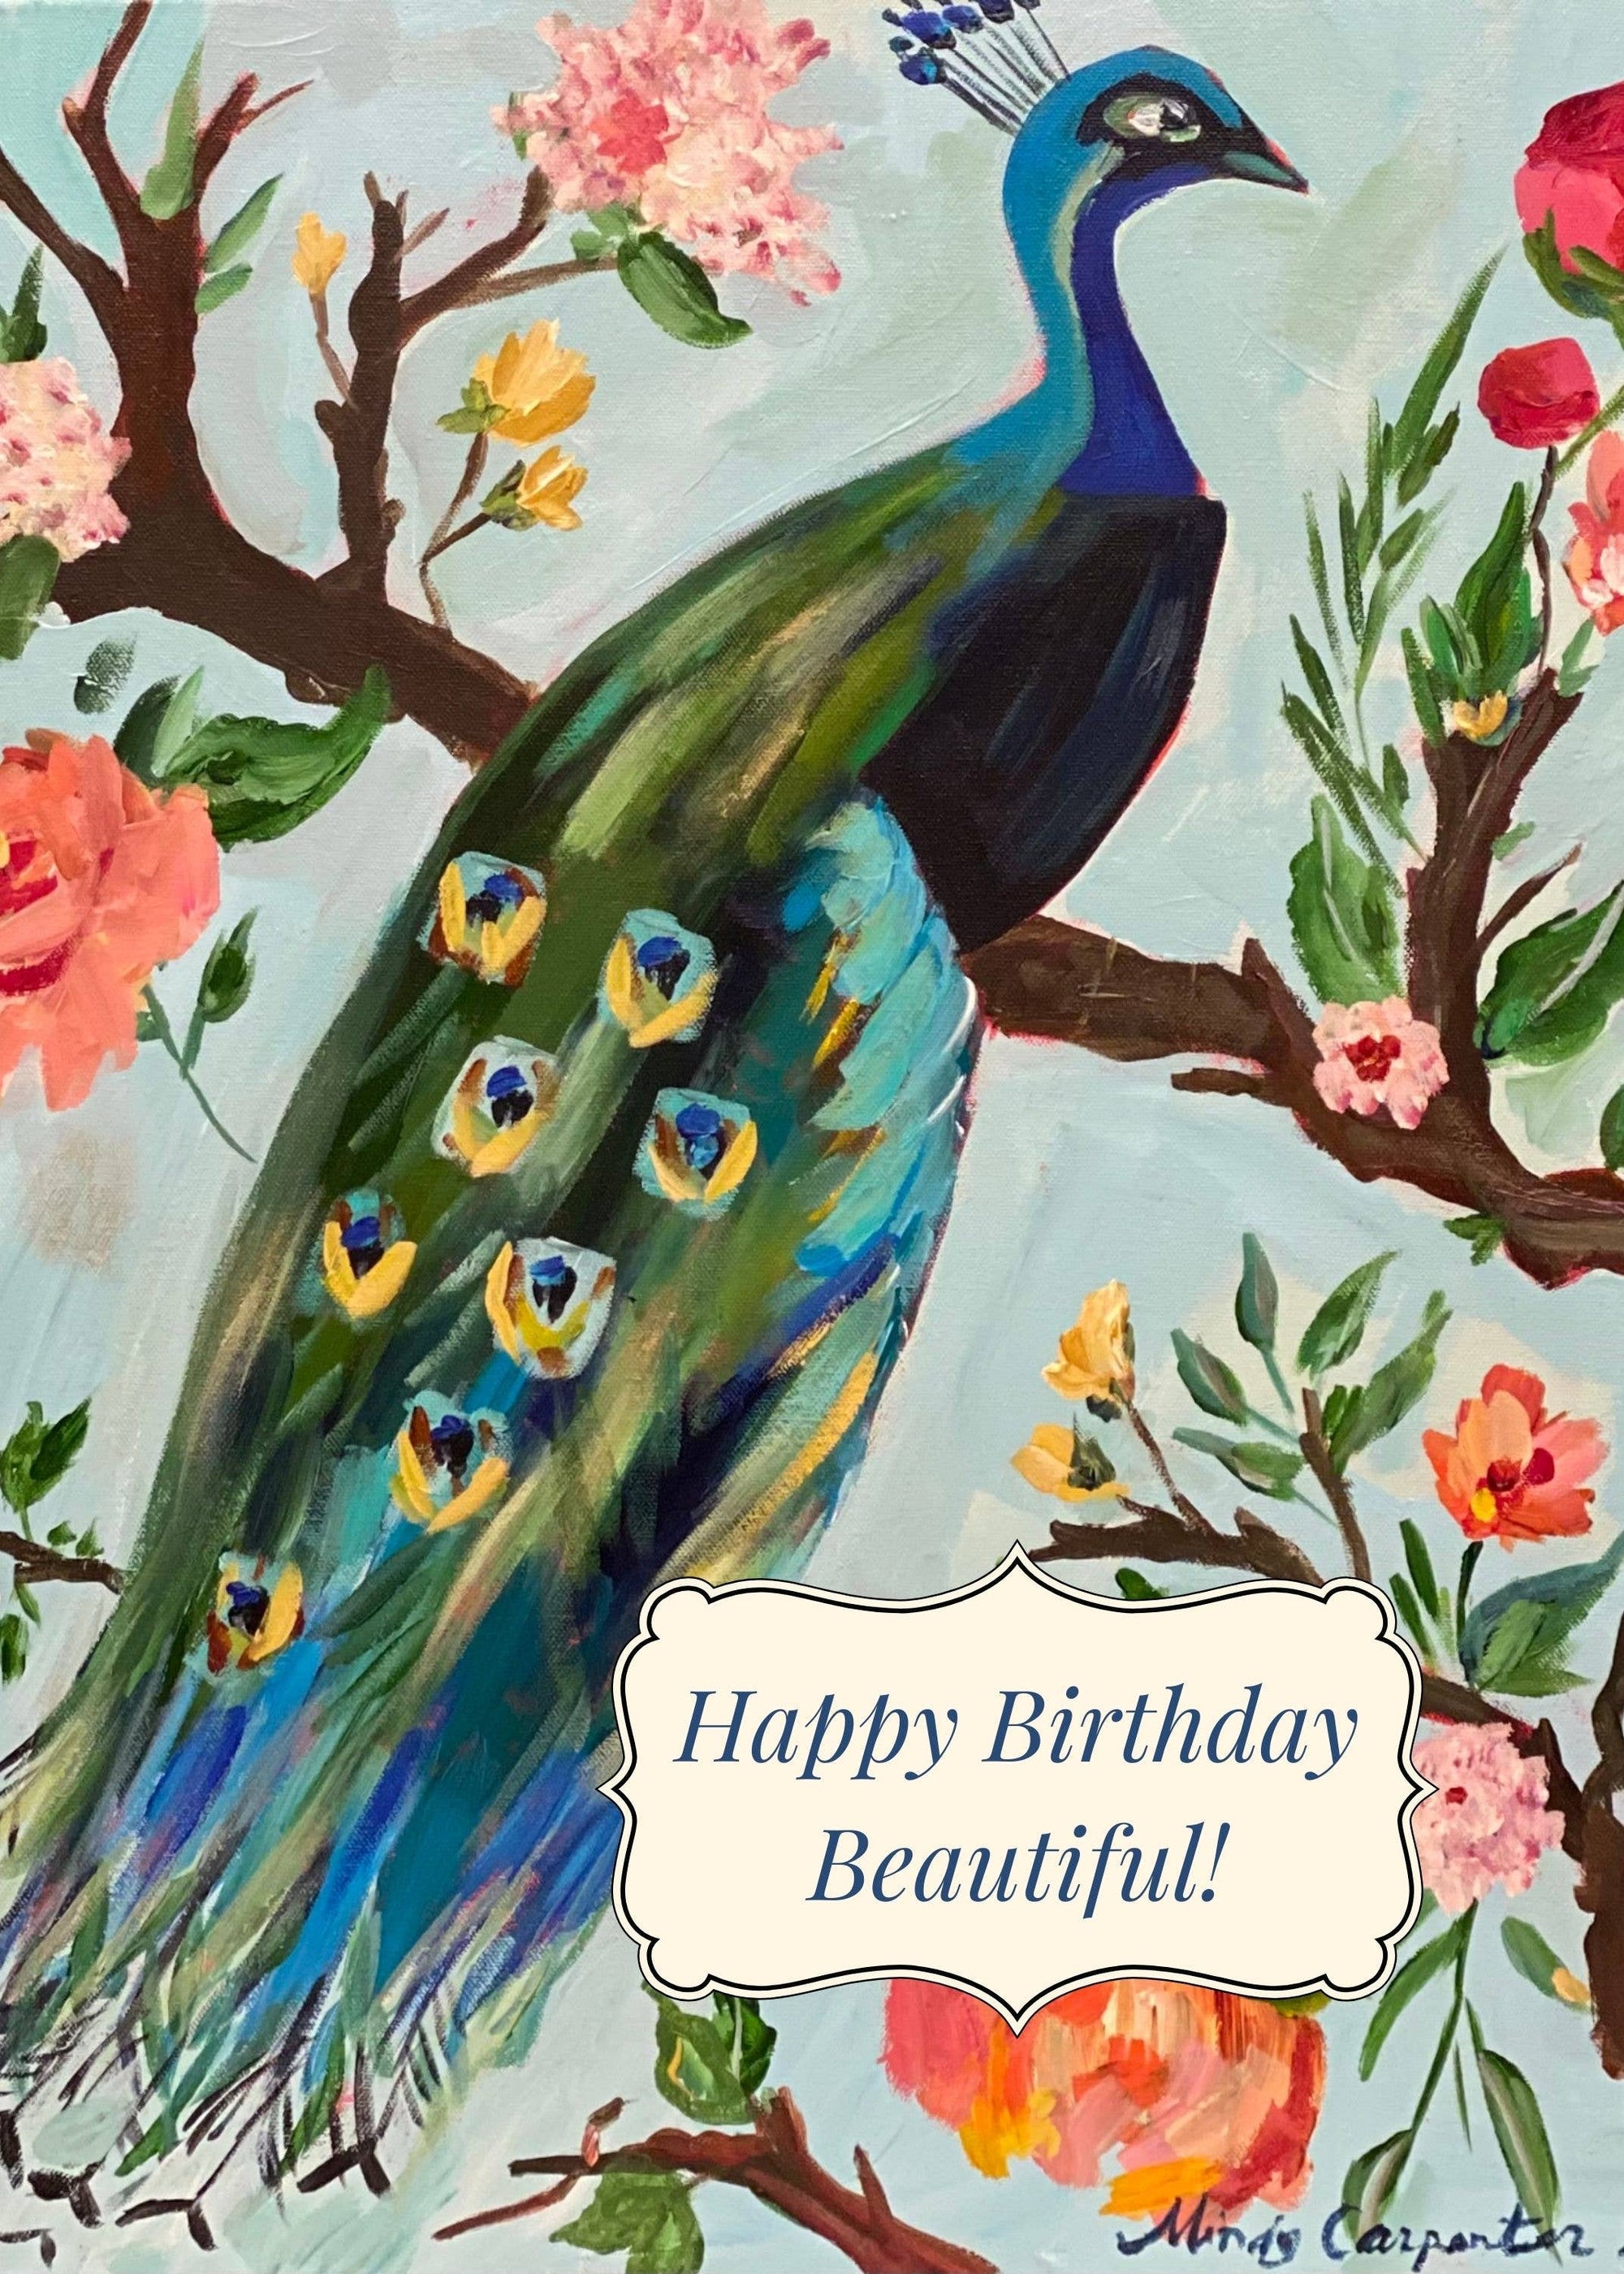 Happy Birthday Peacock Greeting Card